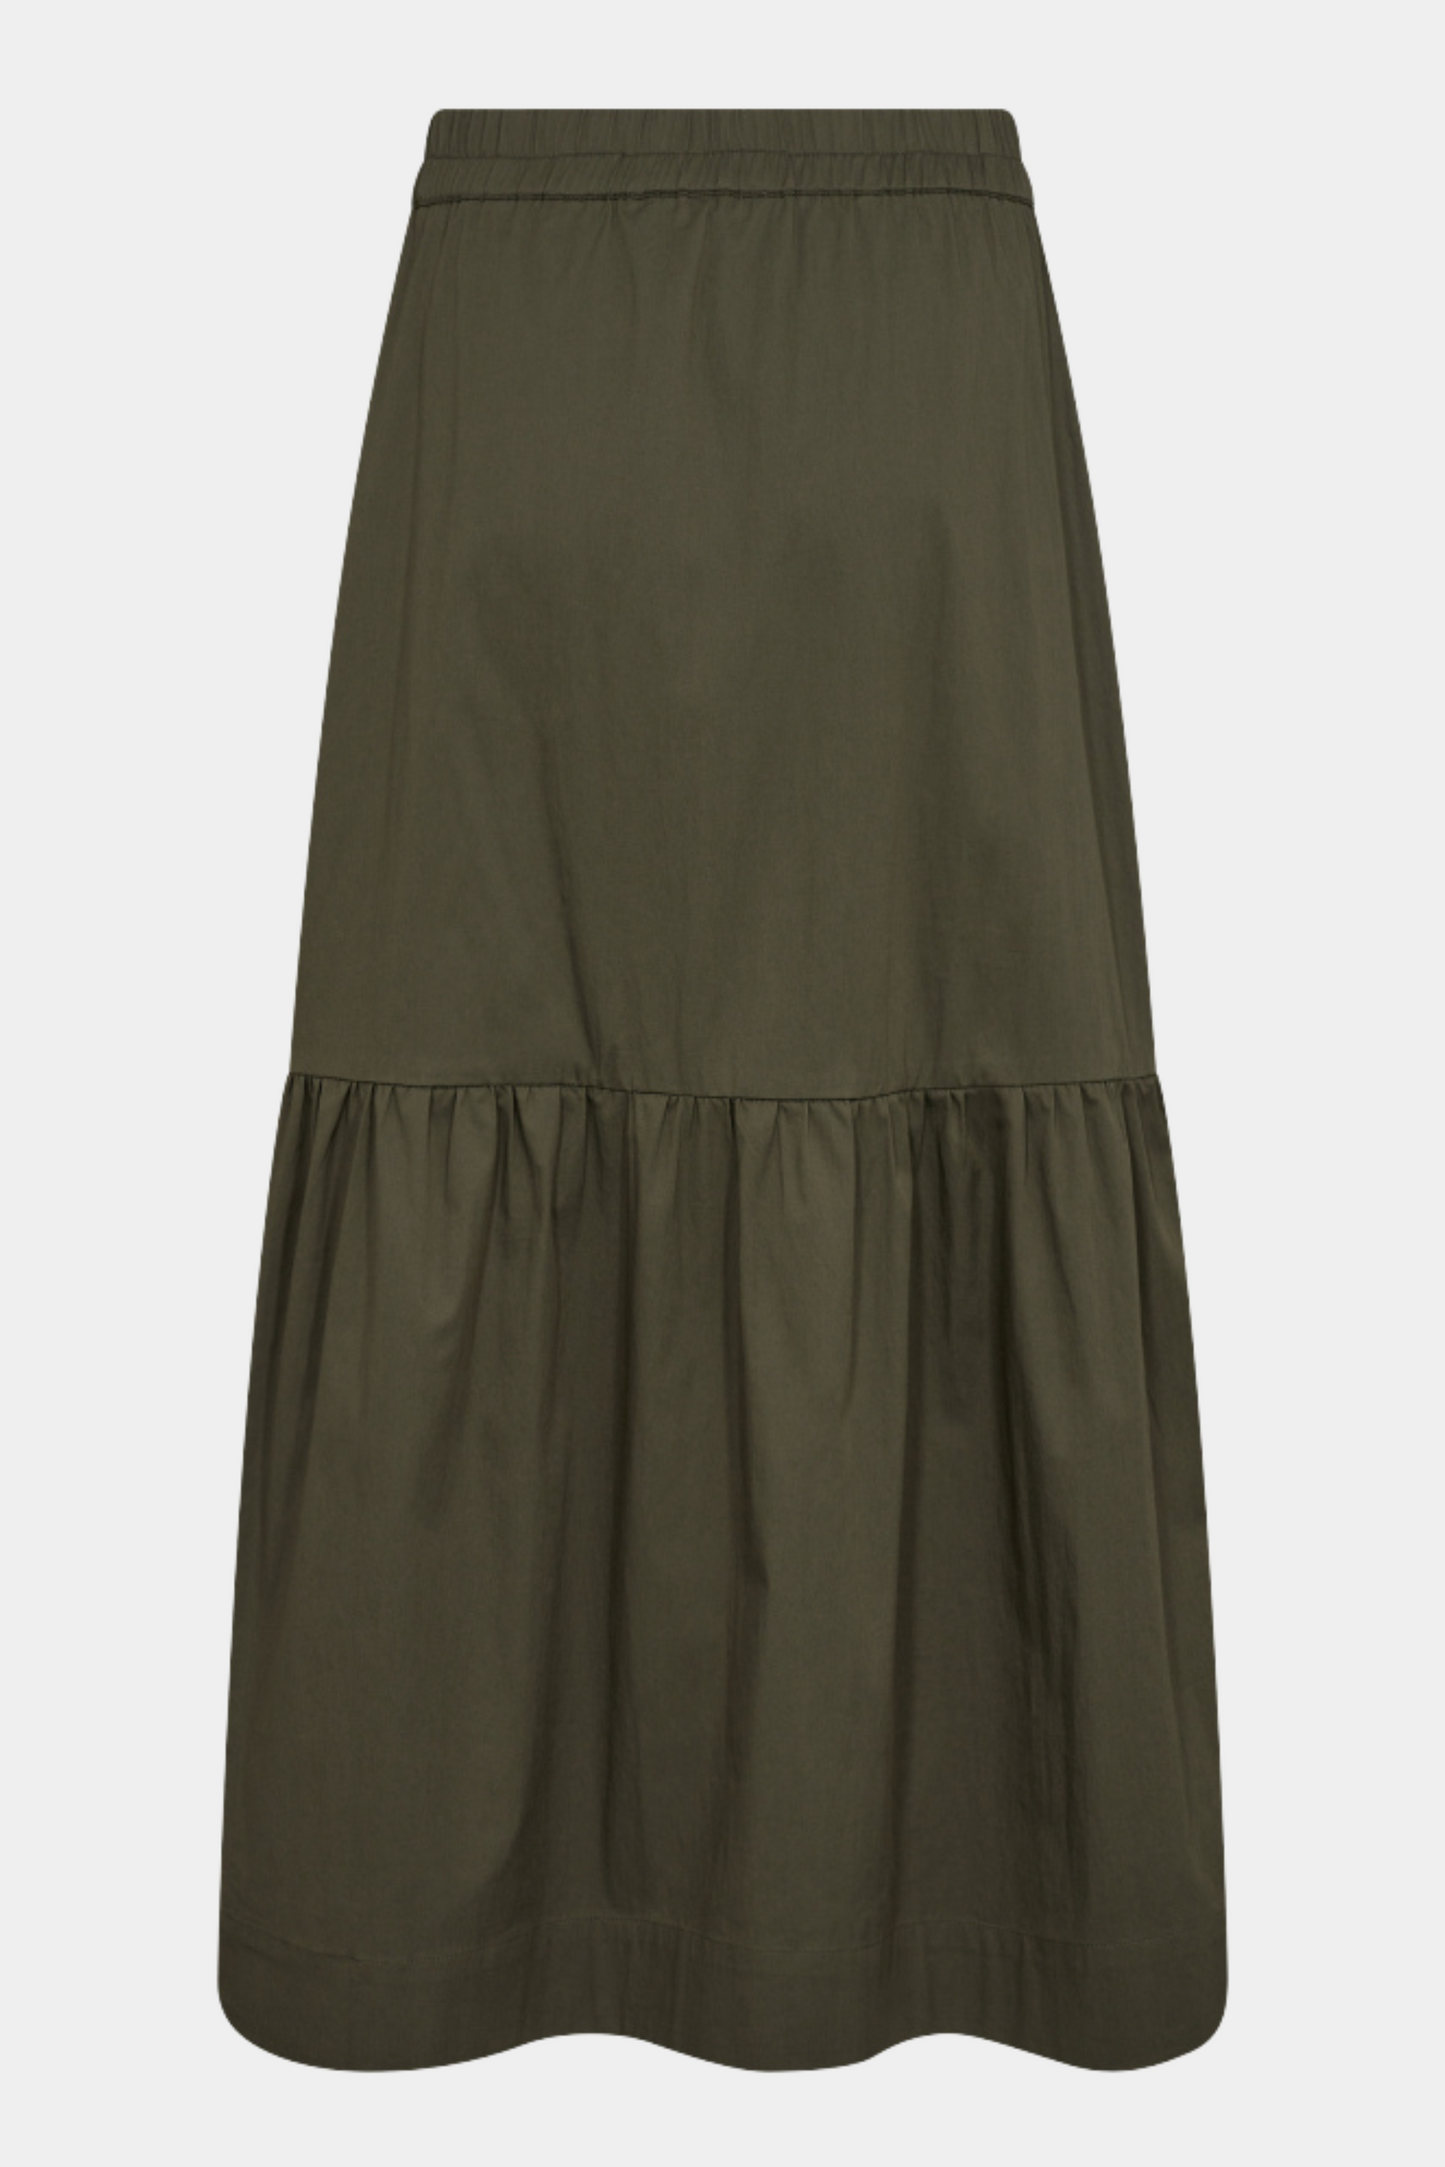 CottonCC crisp gypsy skirt, khaki